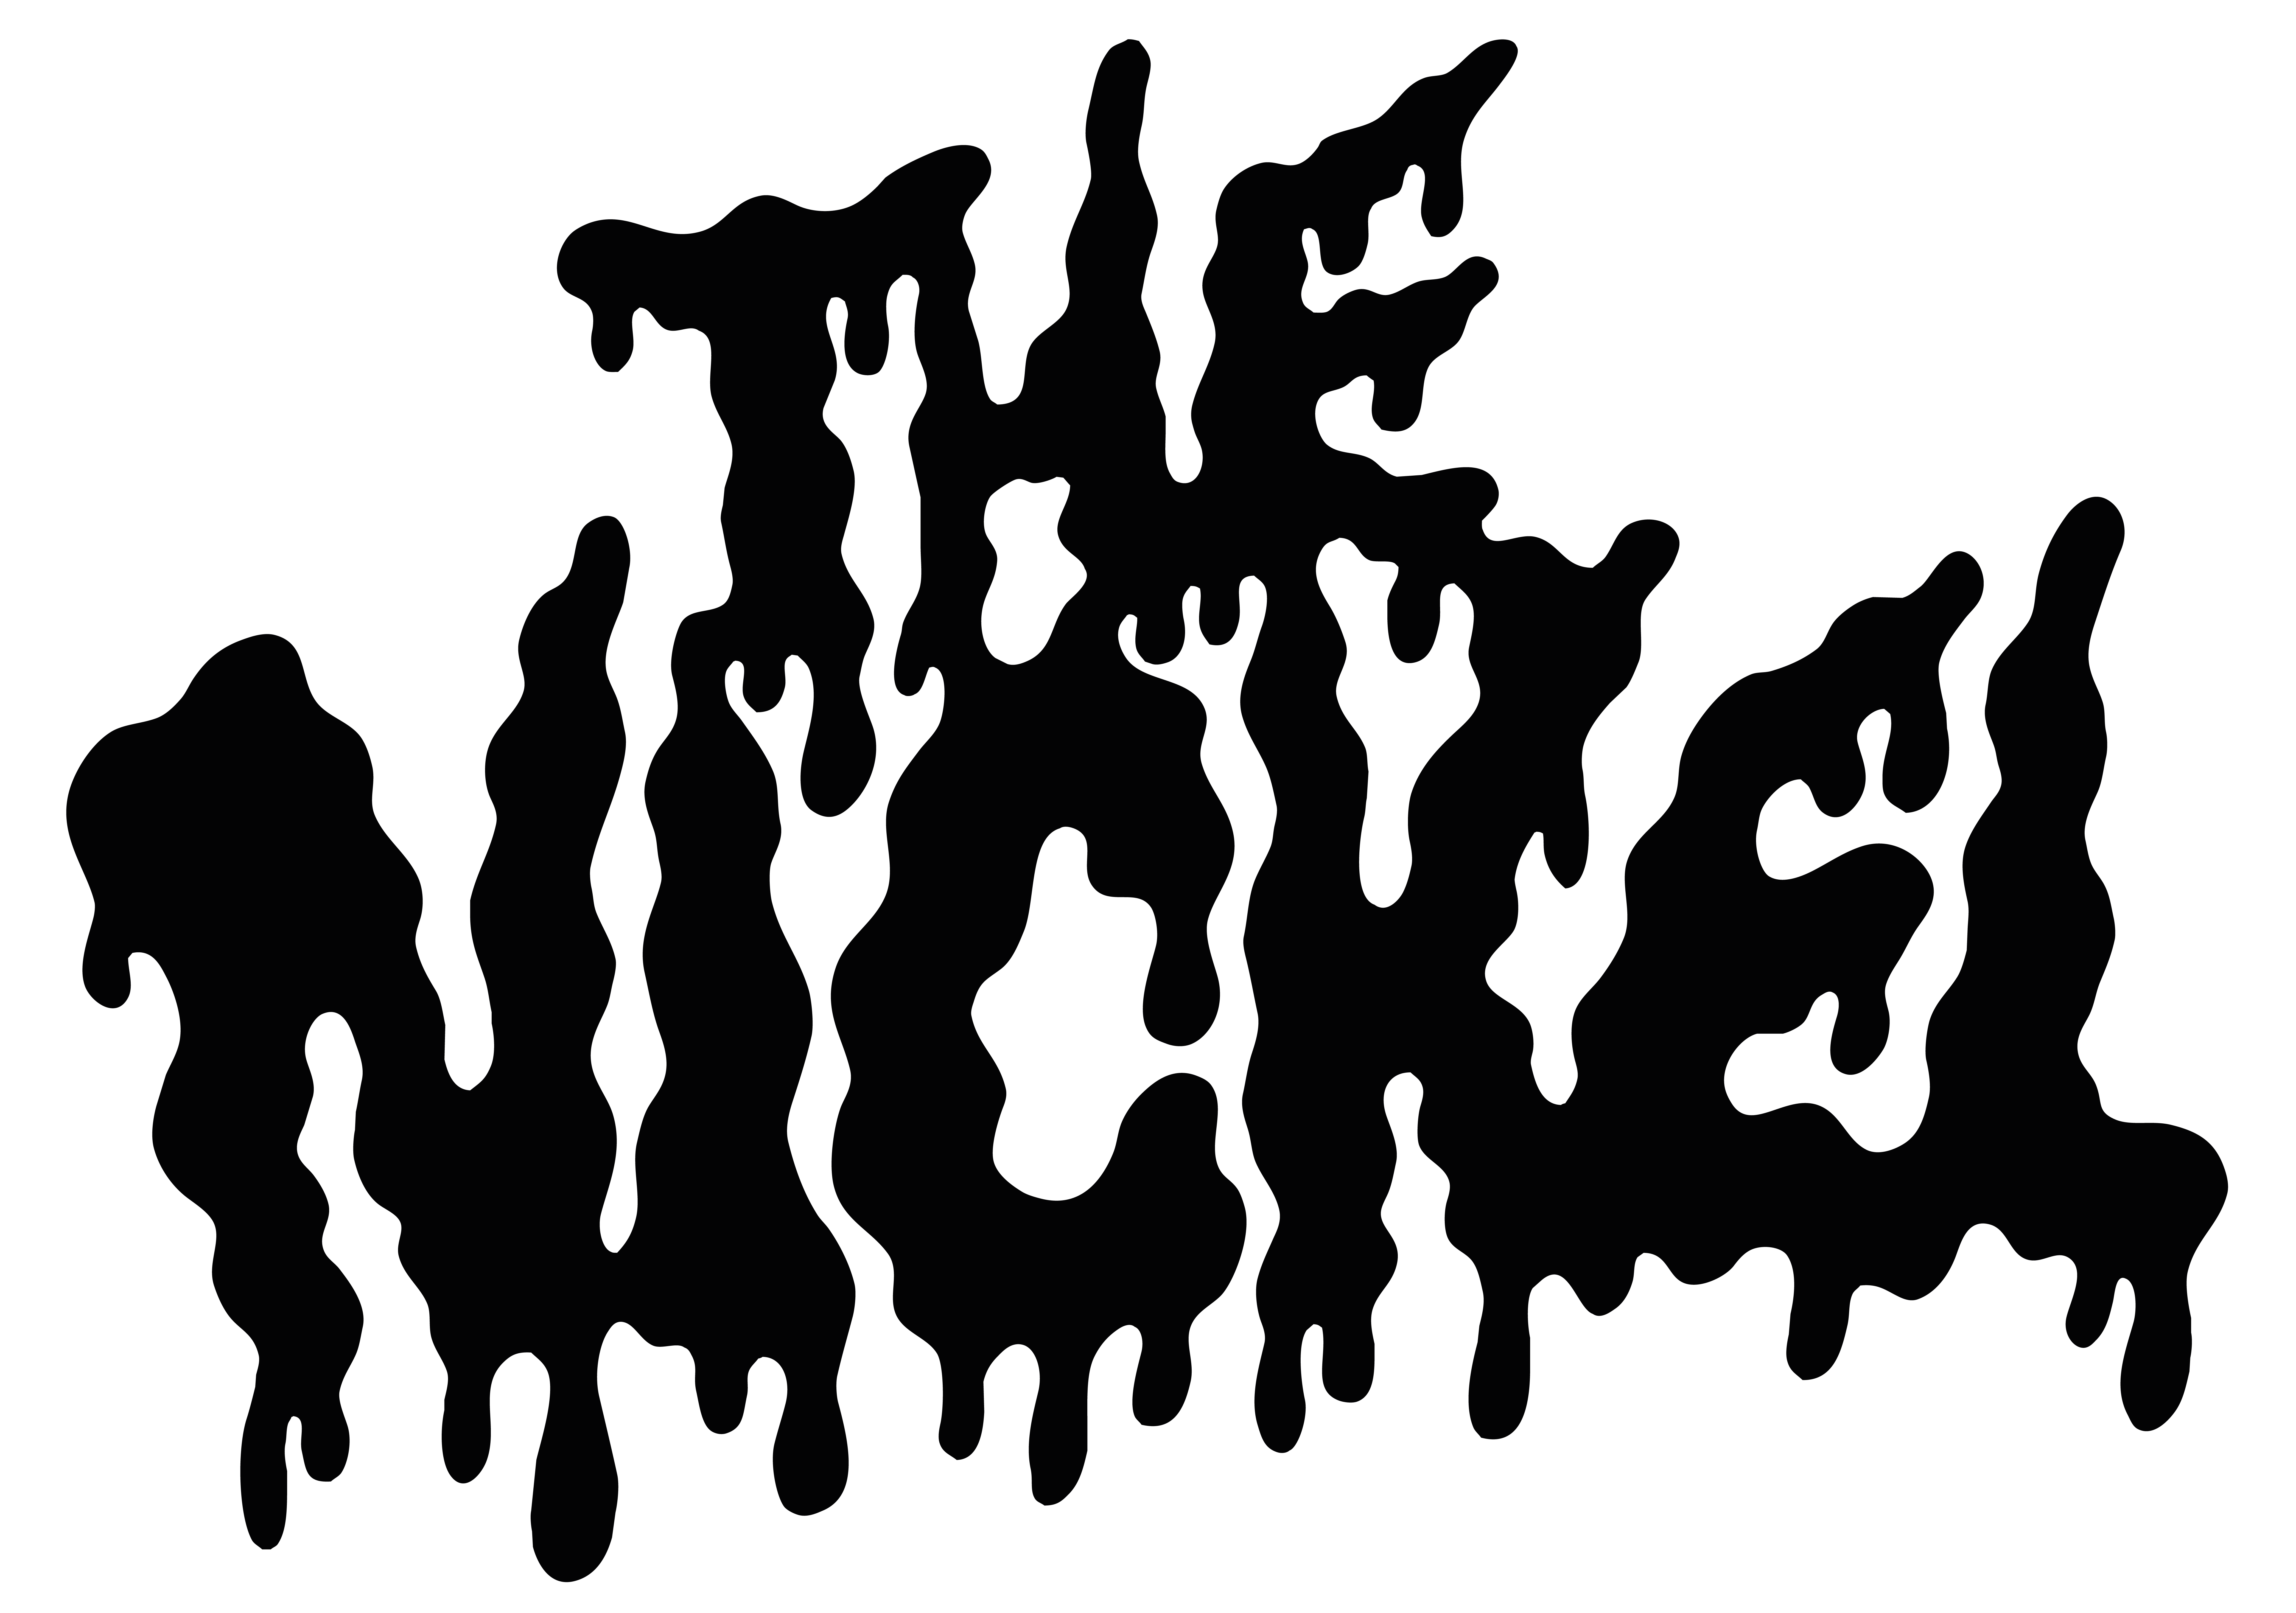 The Nickel logo